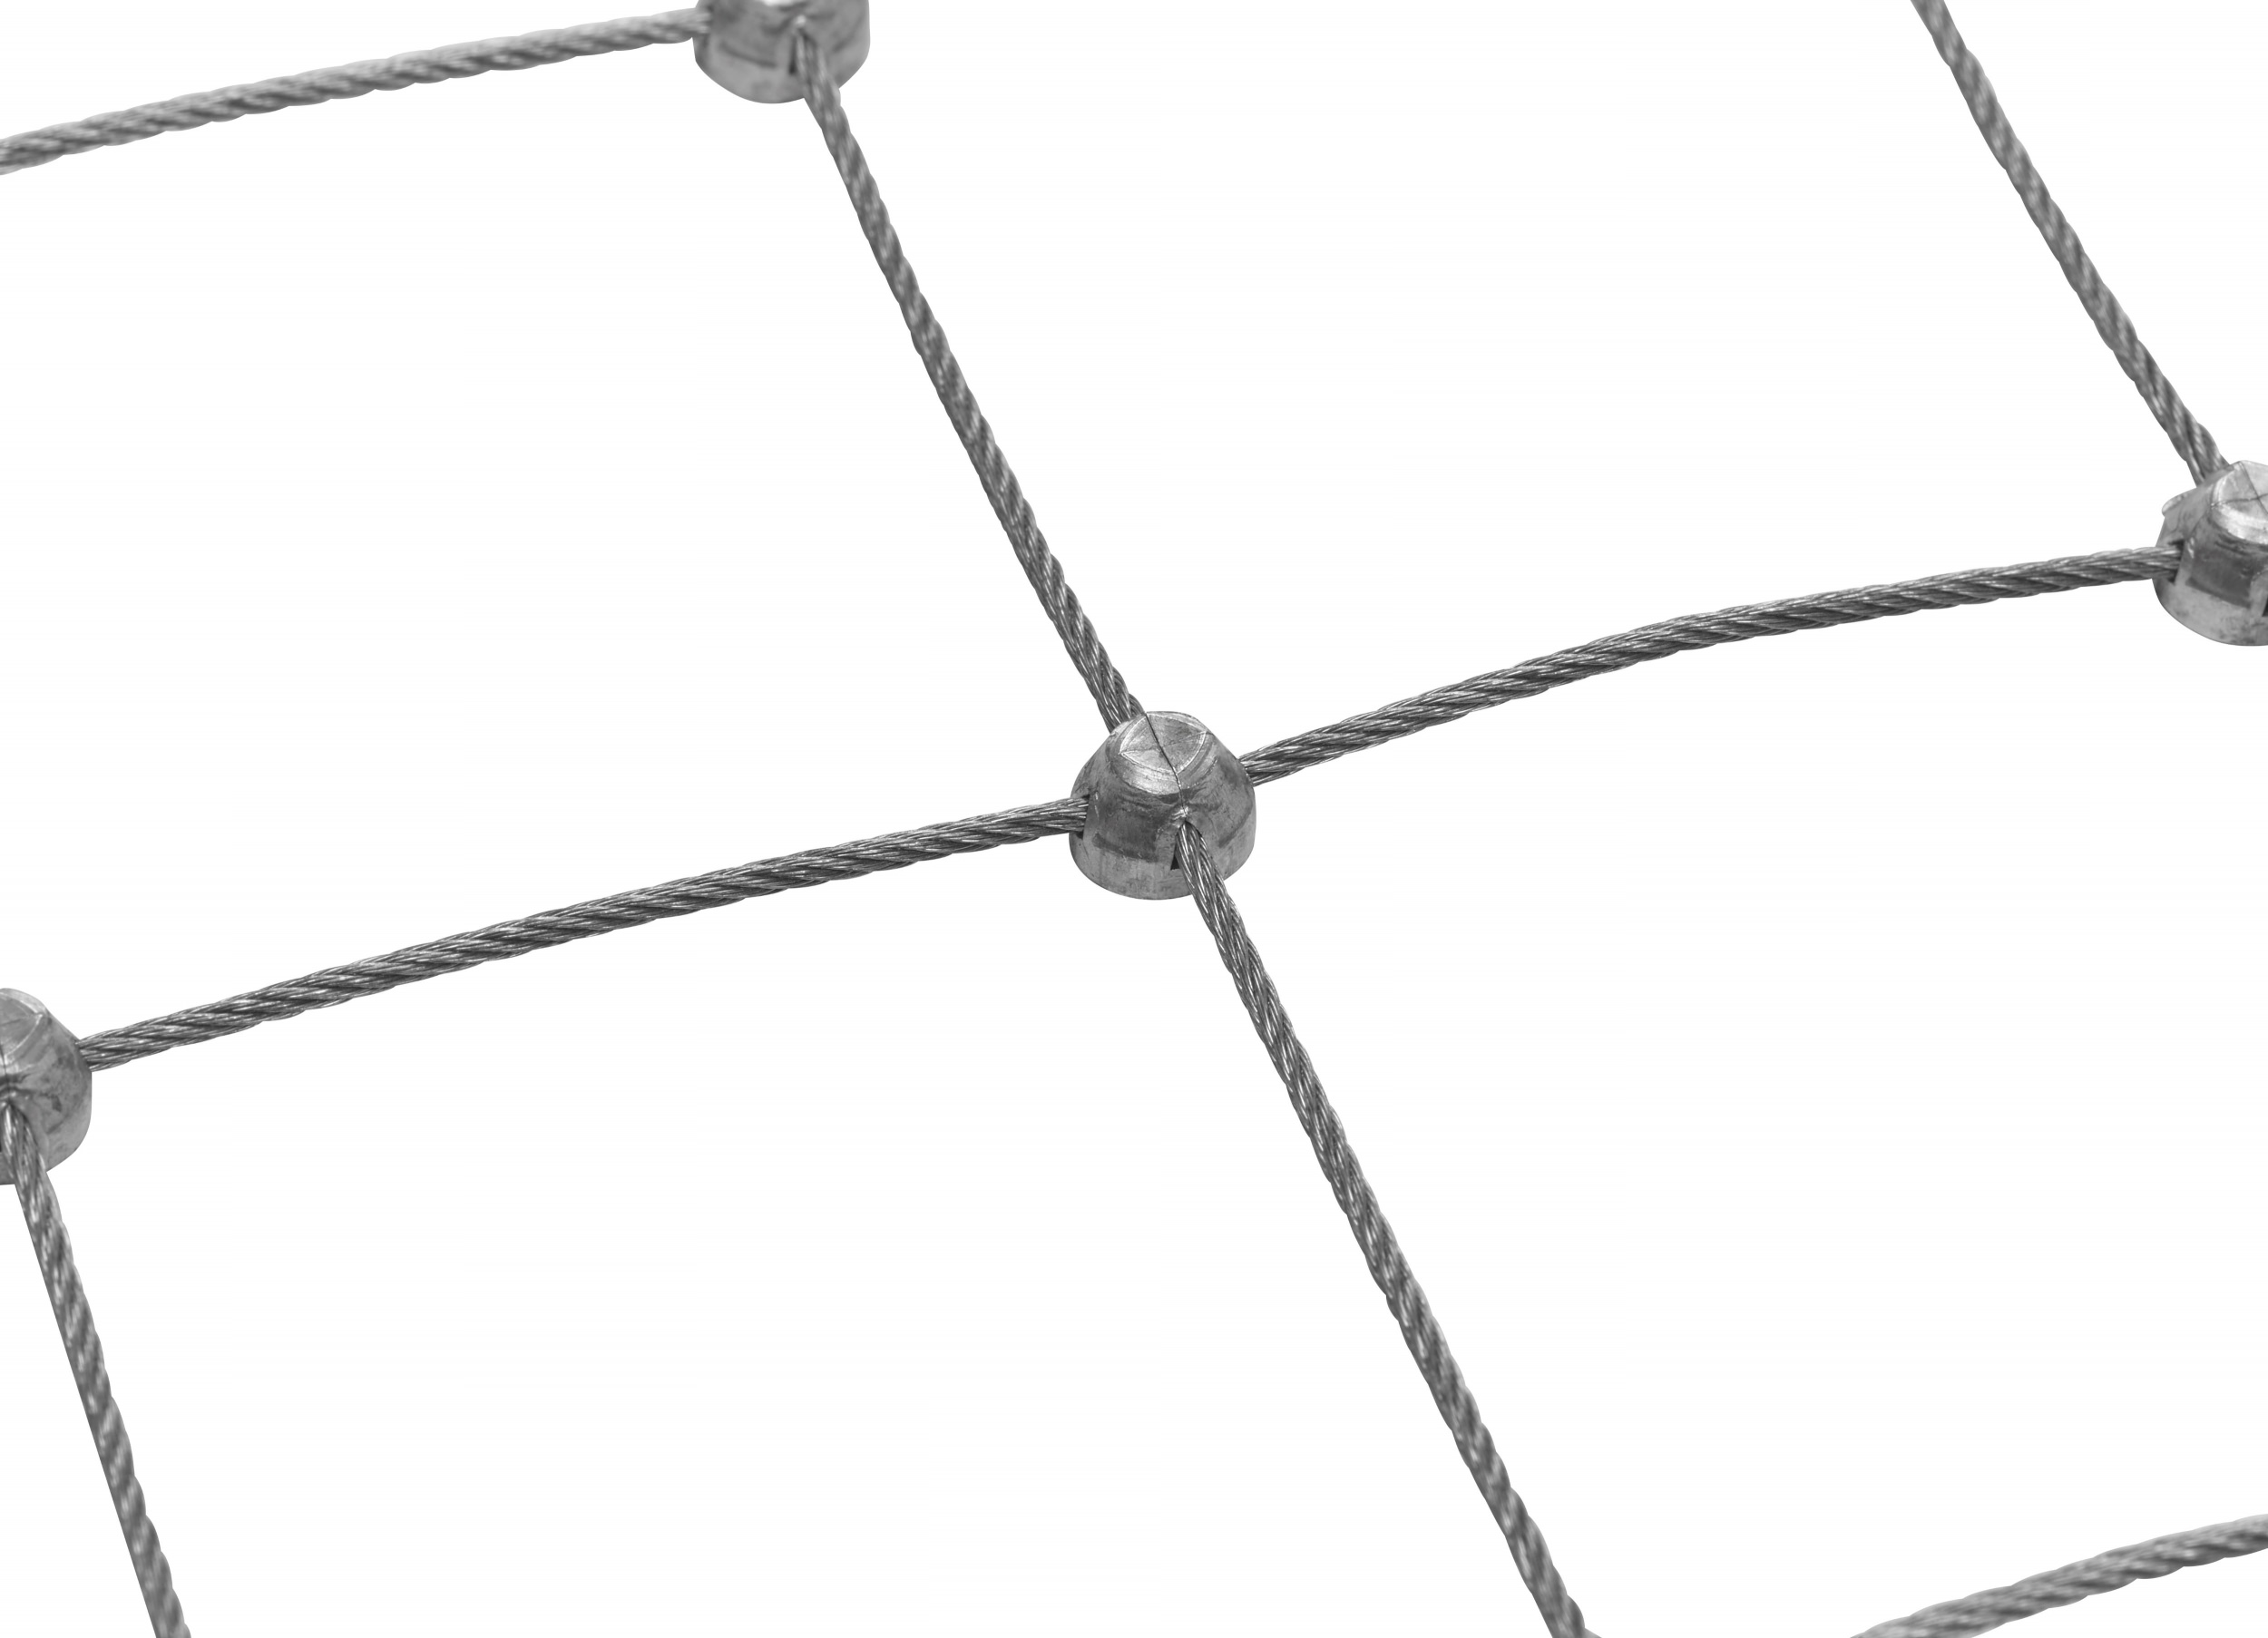 50mm X 50mm Flexible Stainless Steel Wire Rope Mesh Net Garden